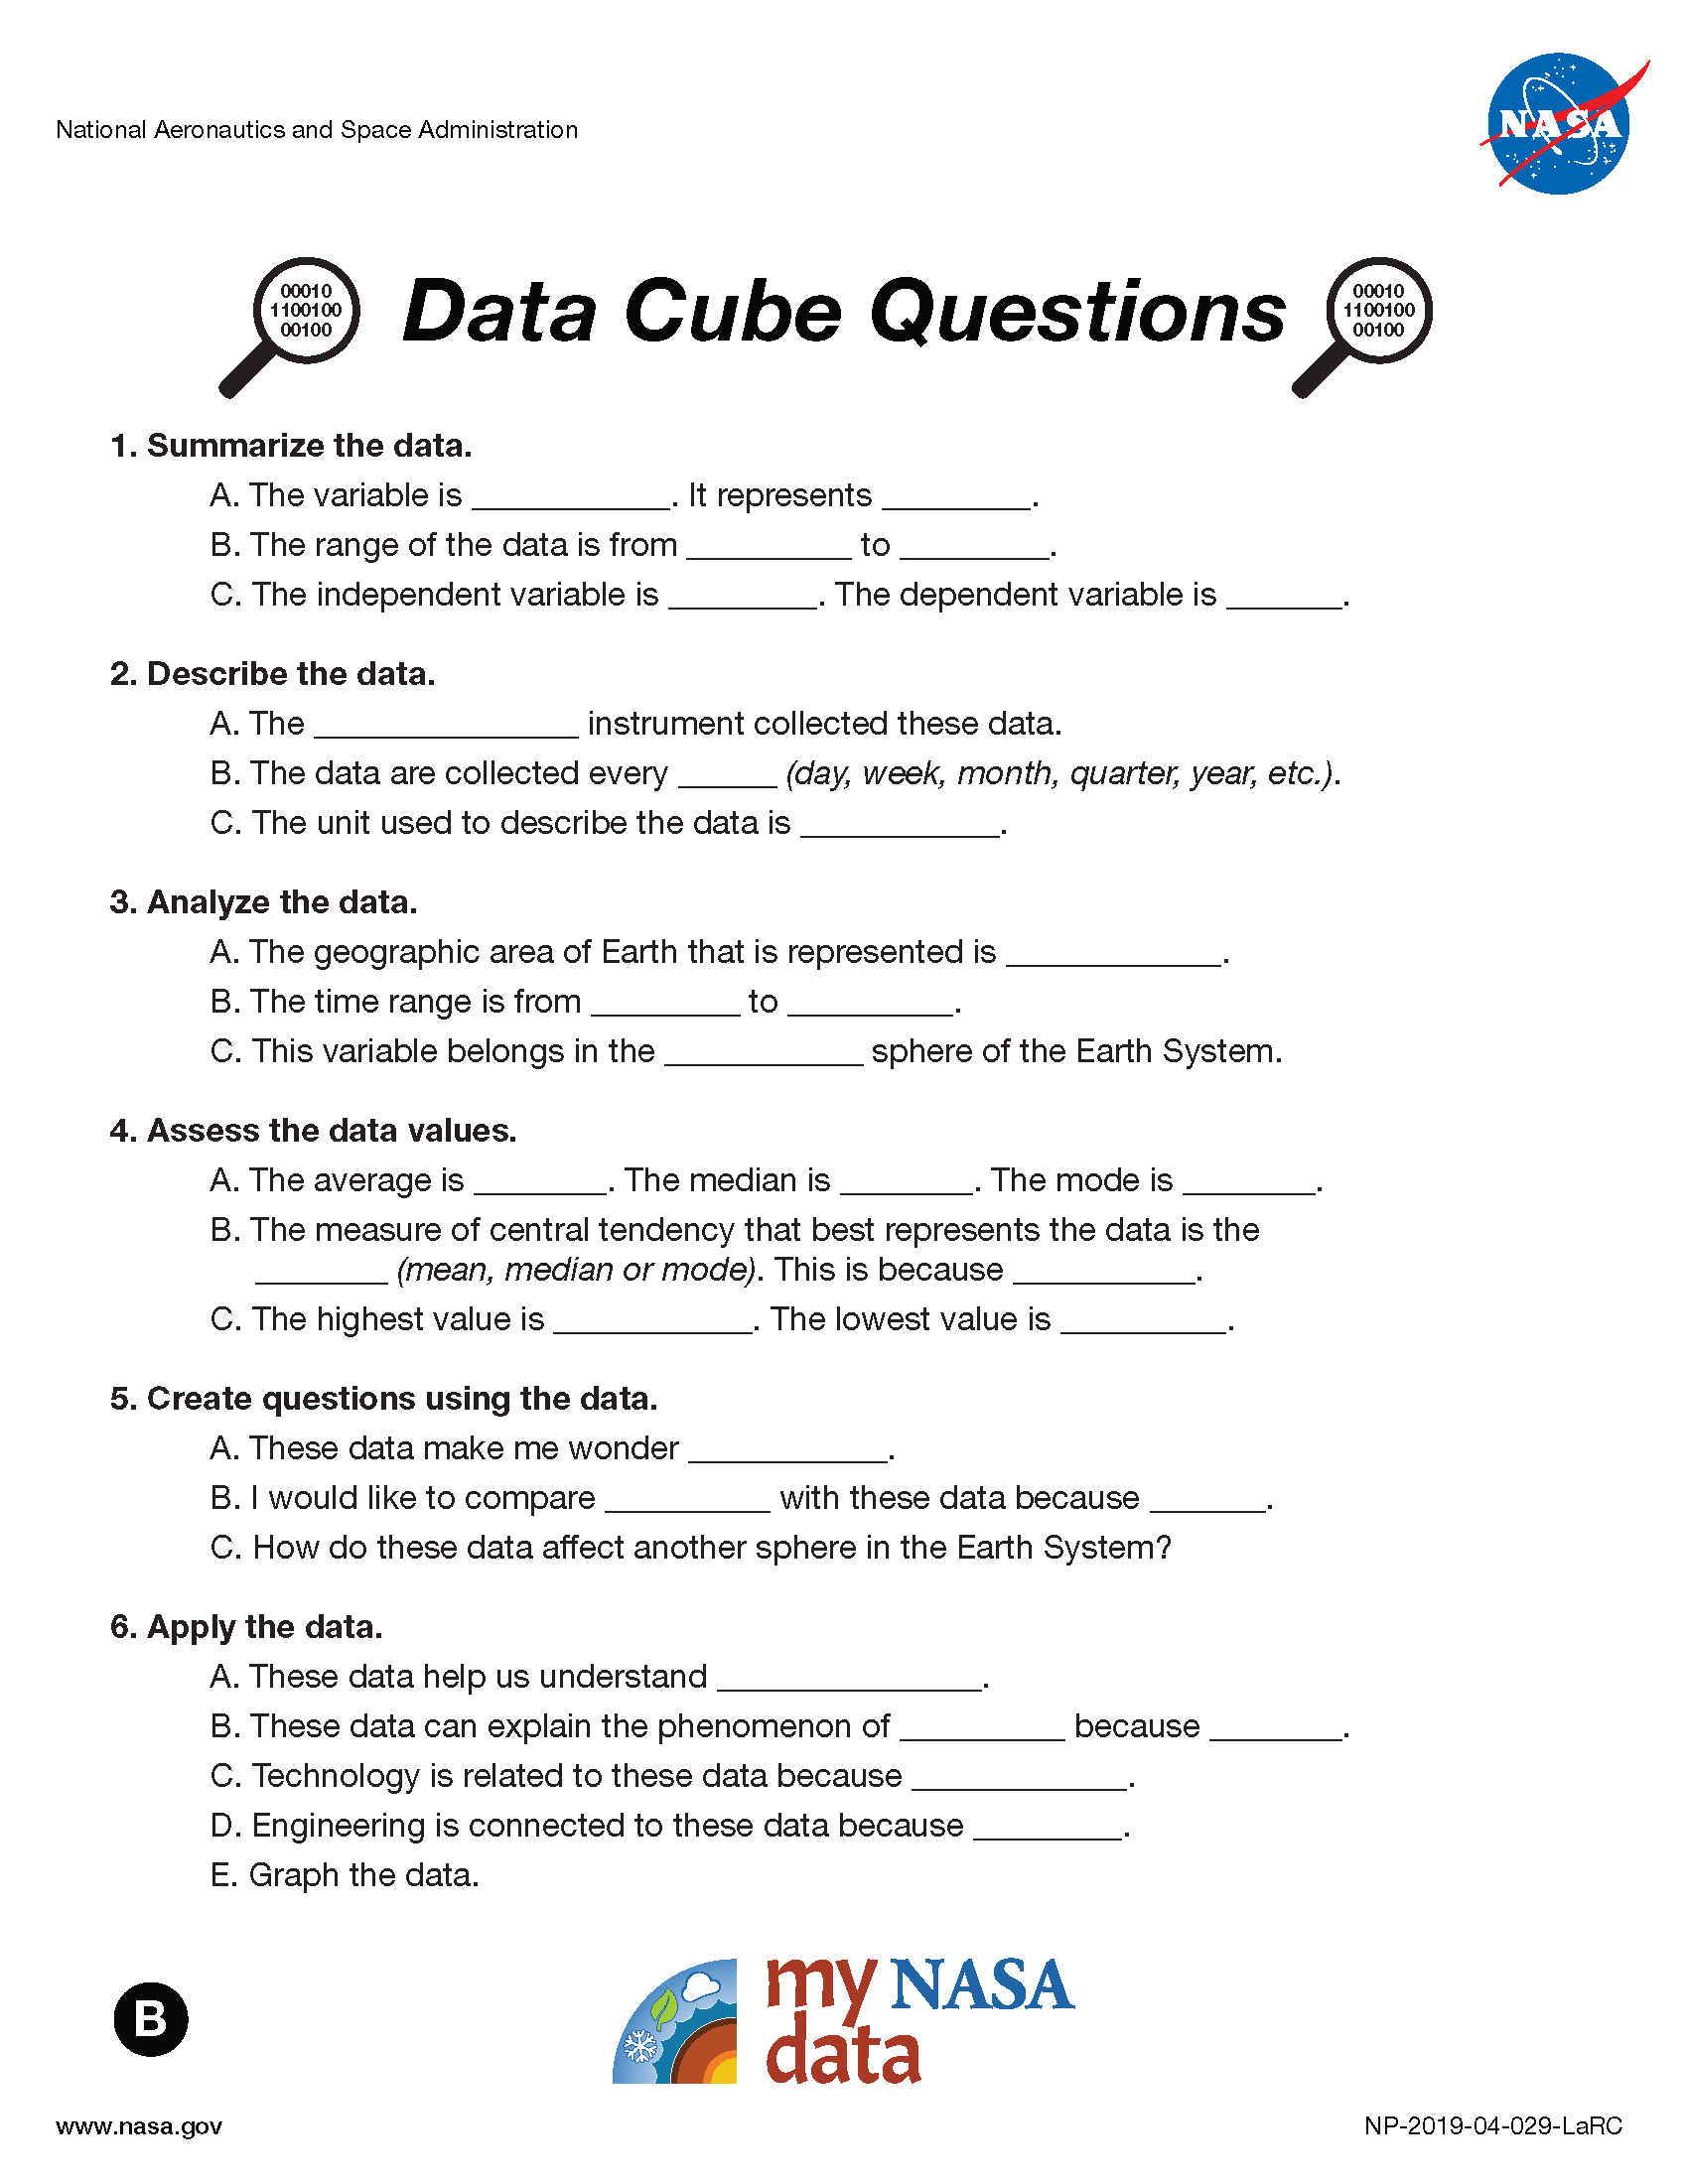 My NASA Data - Data Literacy Cube - Intermediate Questions